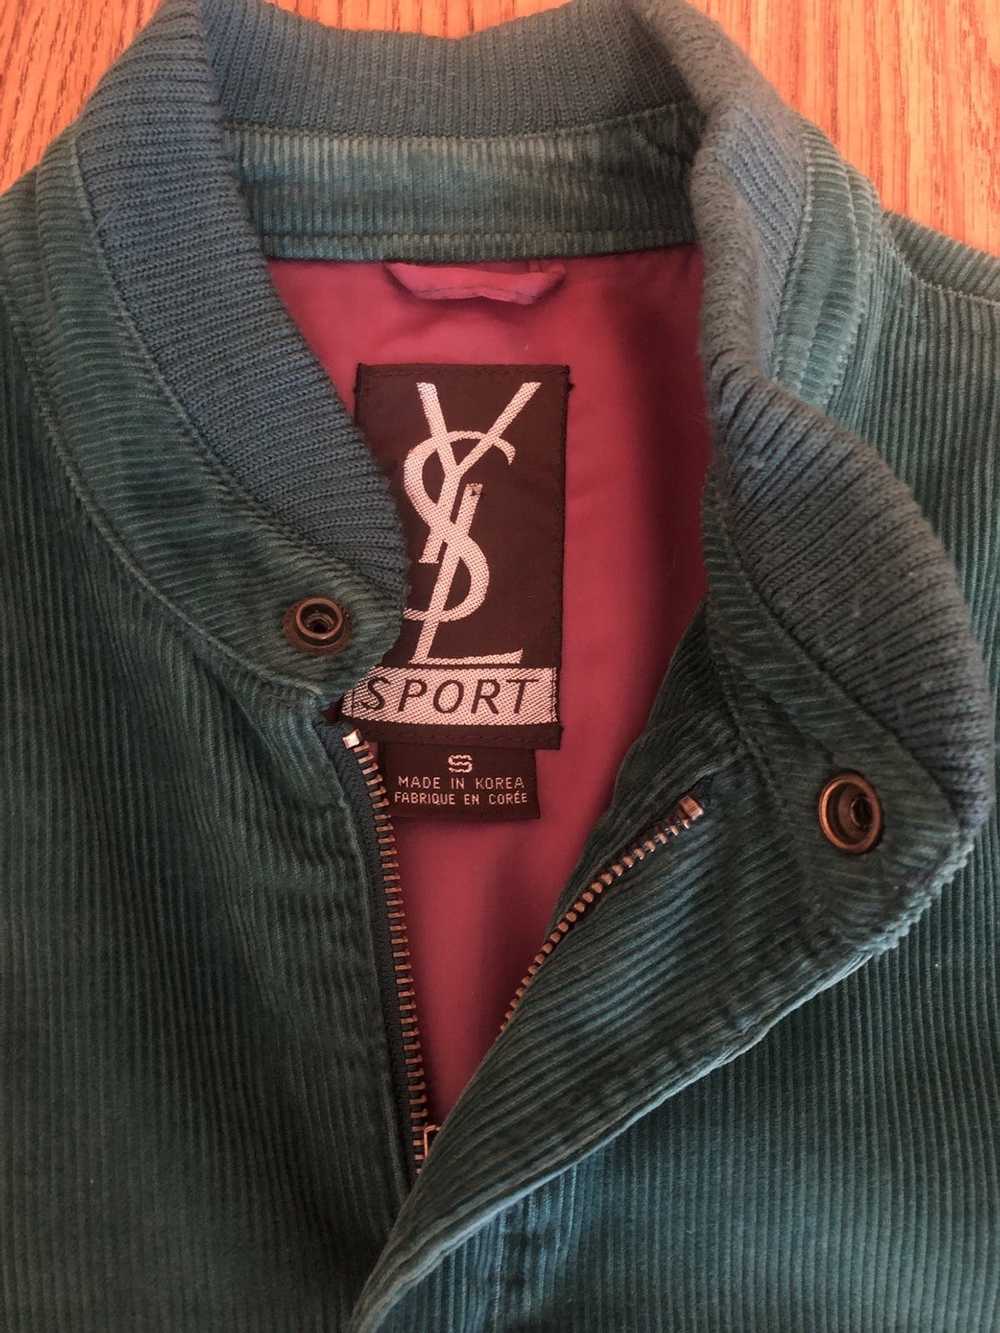 Yves Saint Laurent Ysl Sport corduroy jacket - image 6